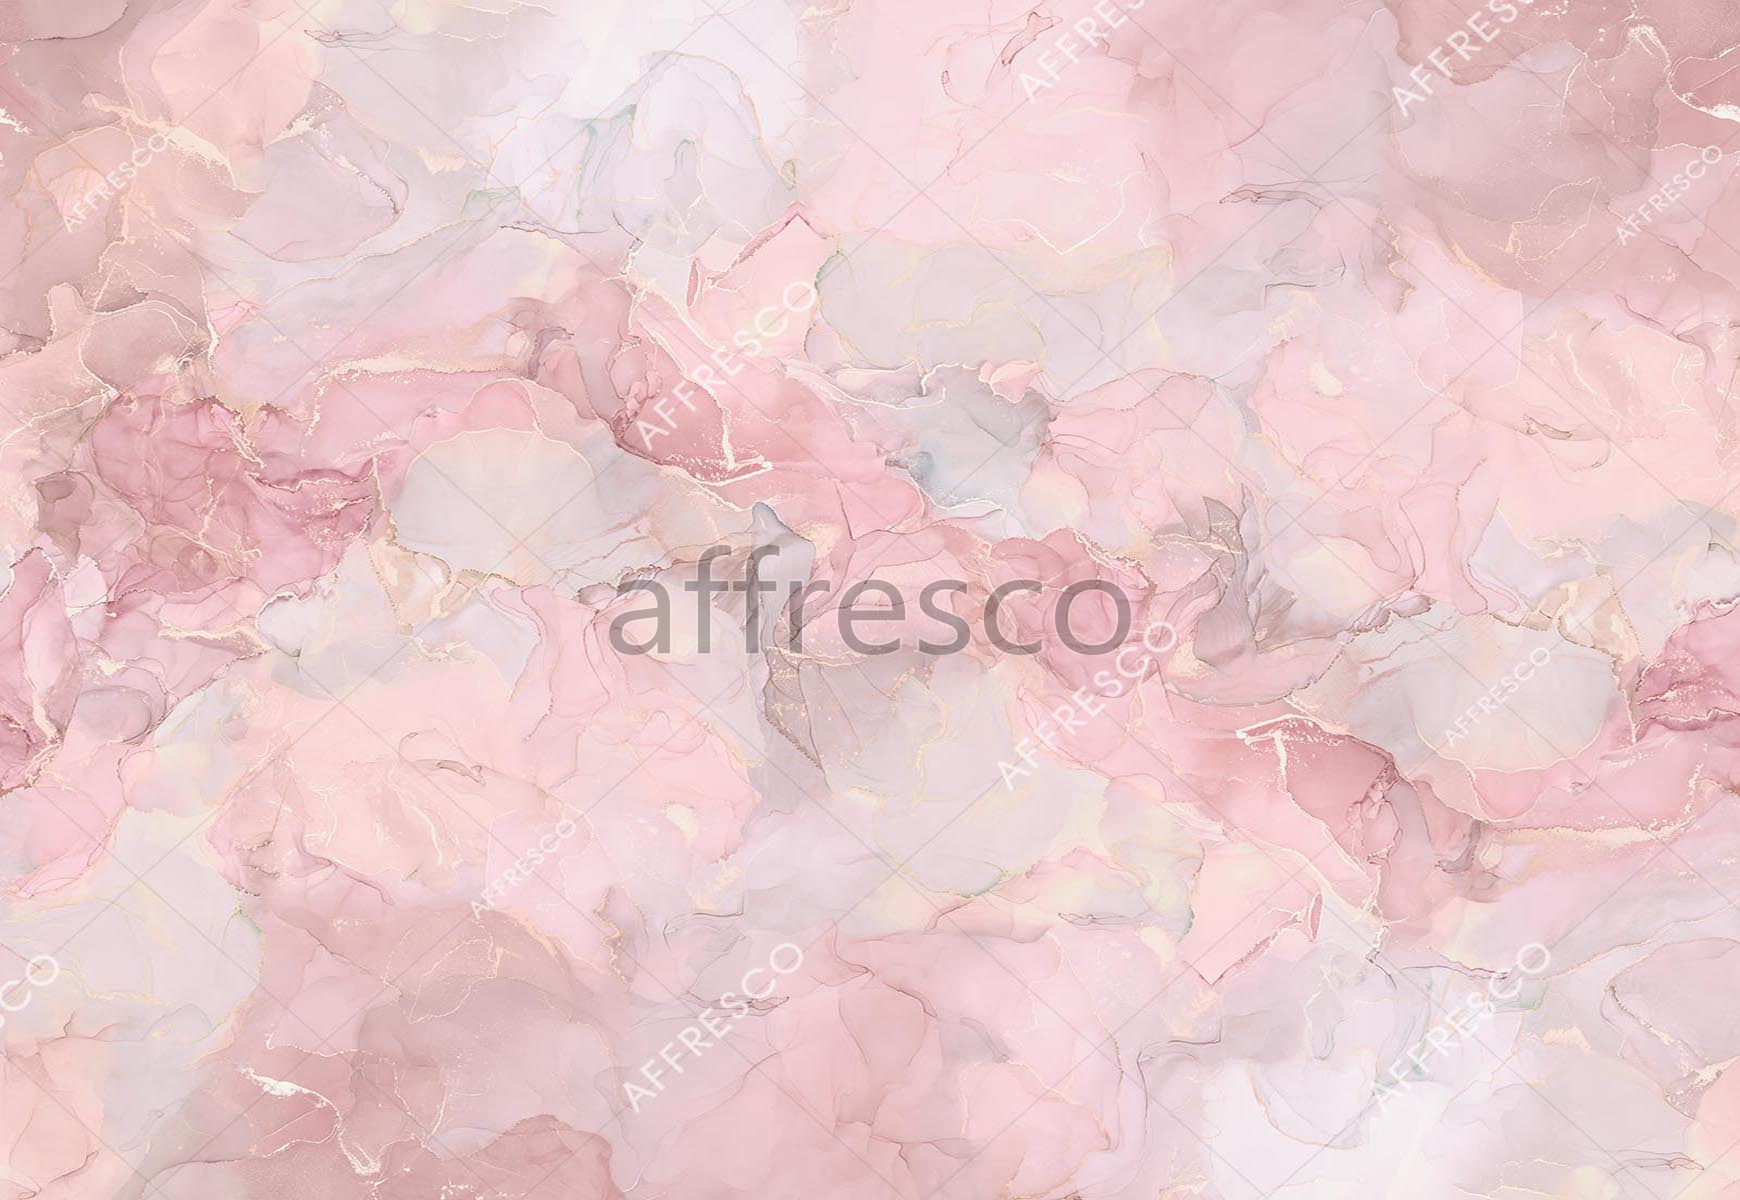 ID139102 | Fluid | pink tourmaline | Affresco Factory